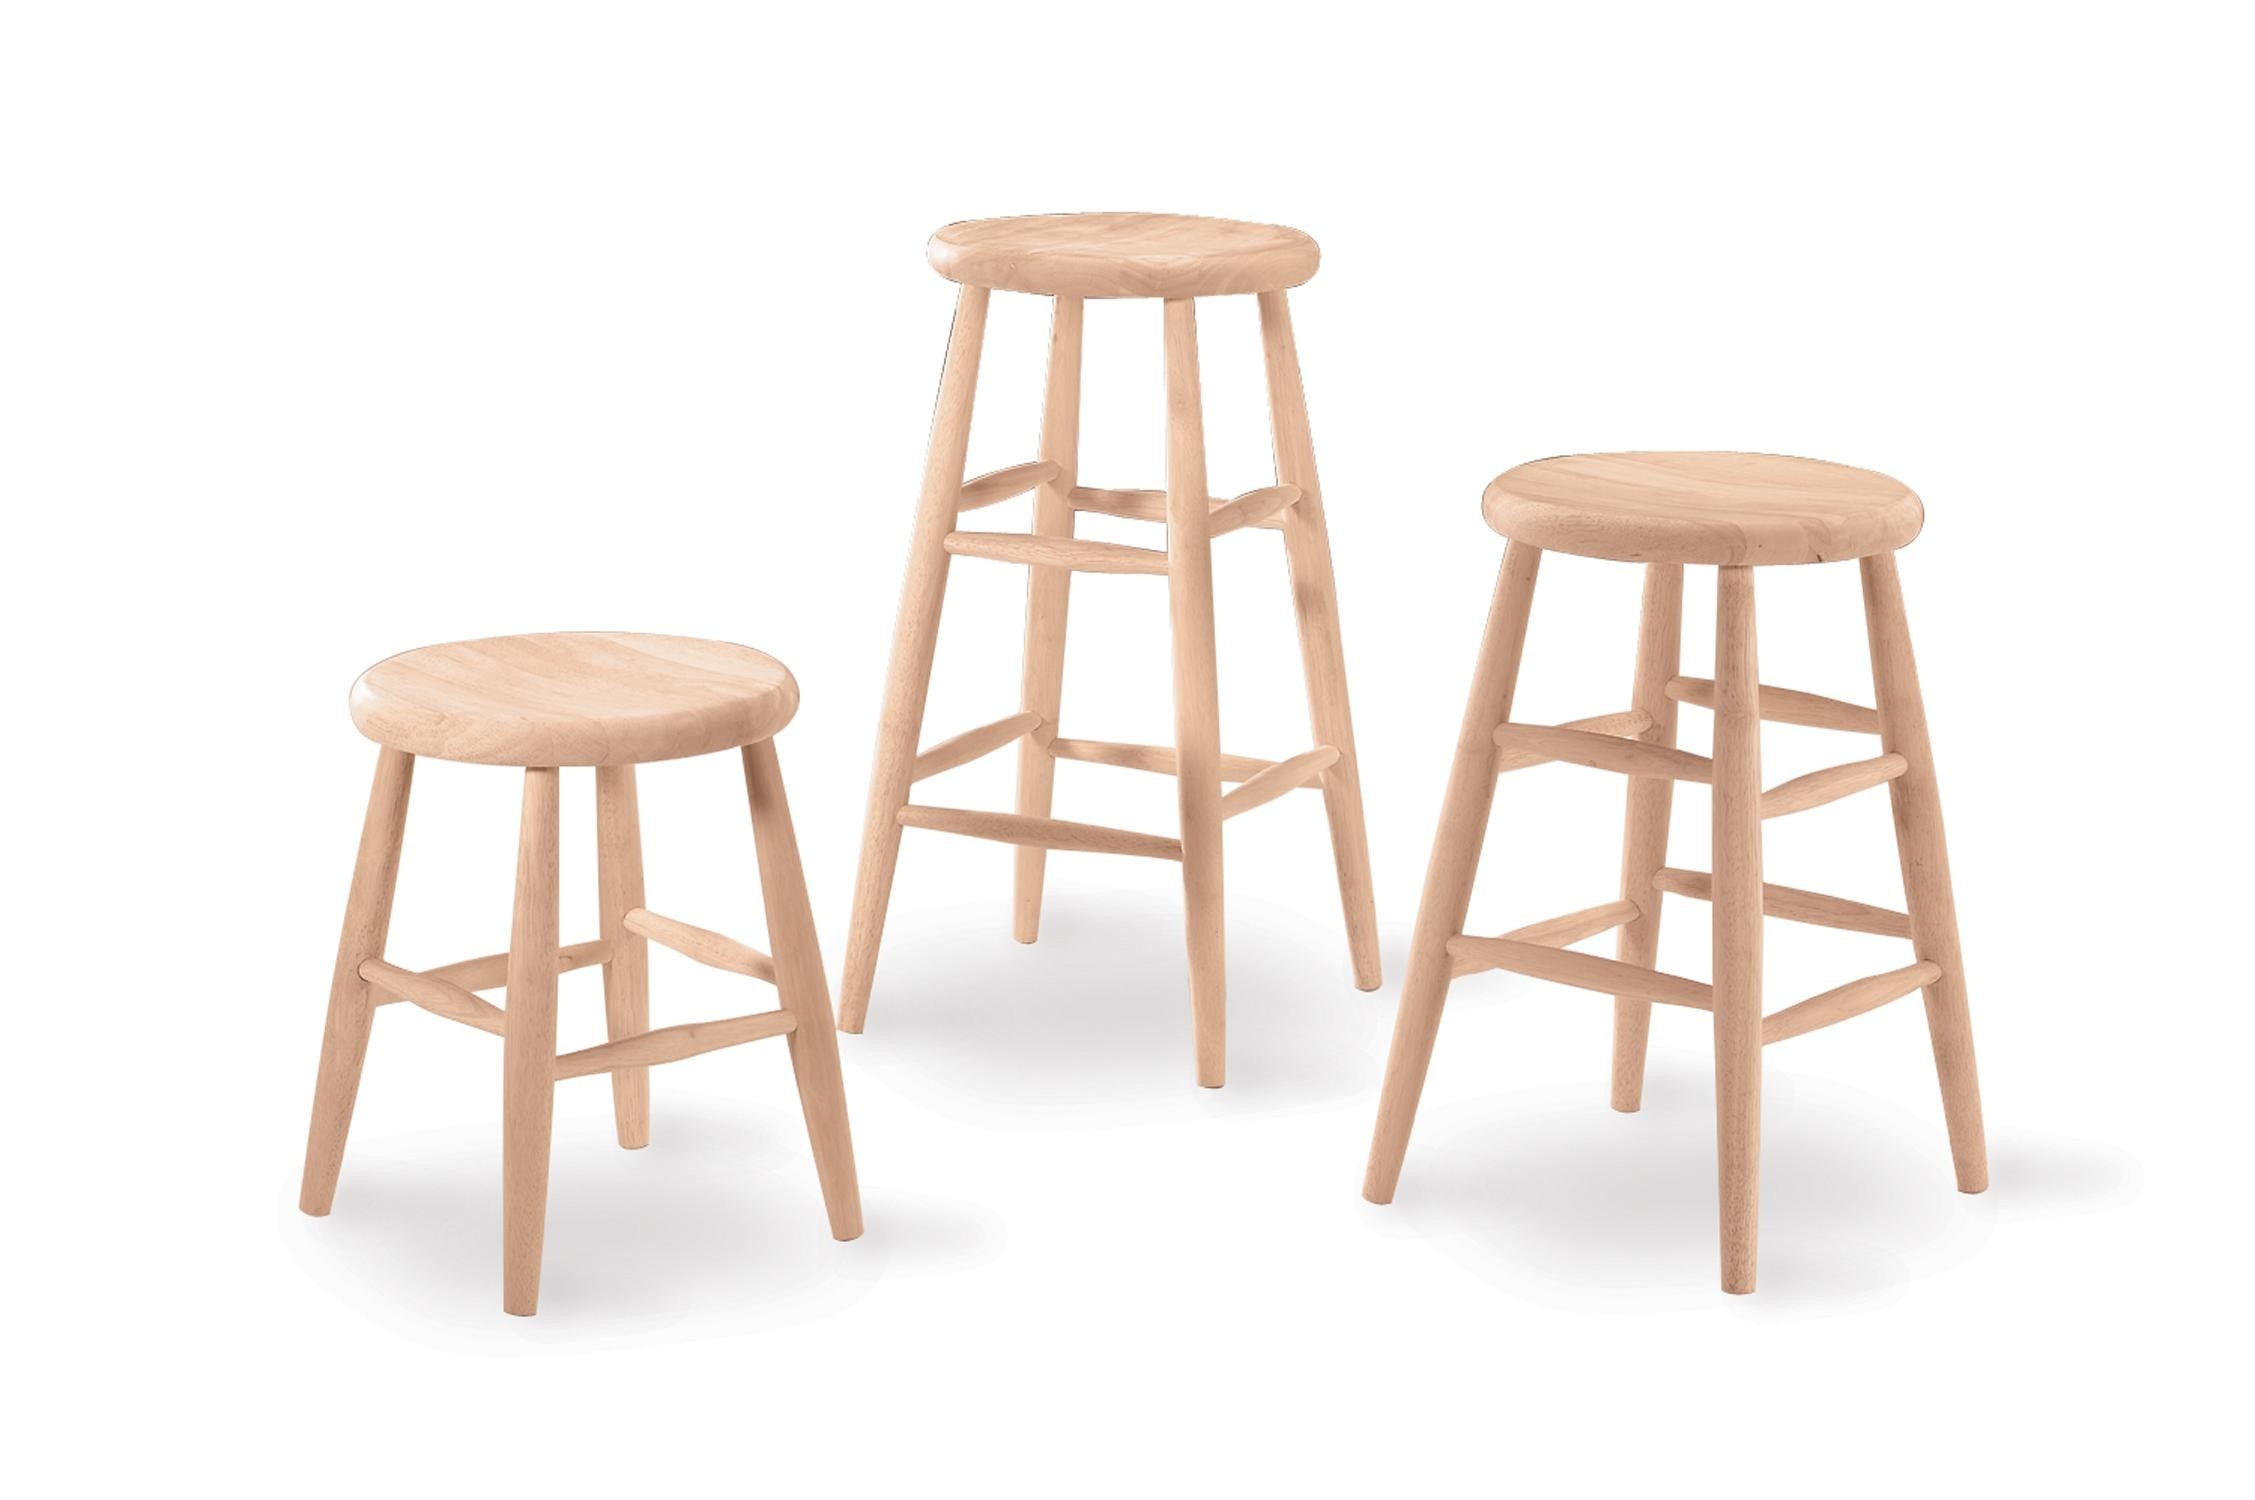 35 inch bar stools